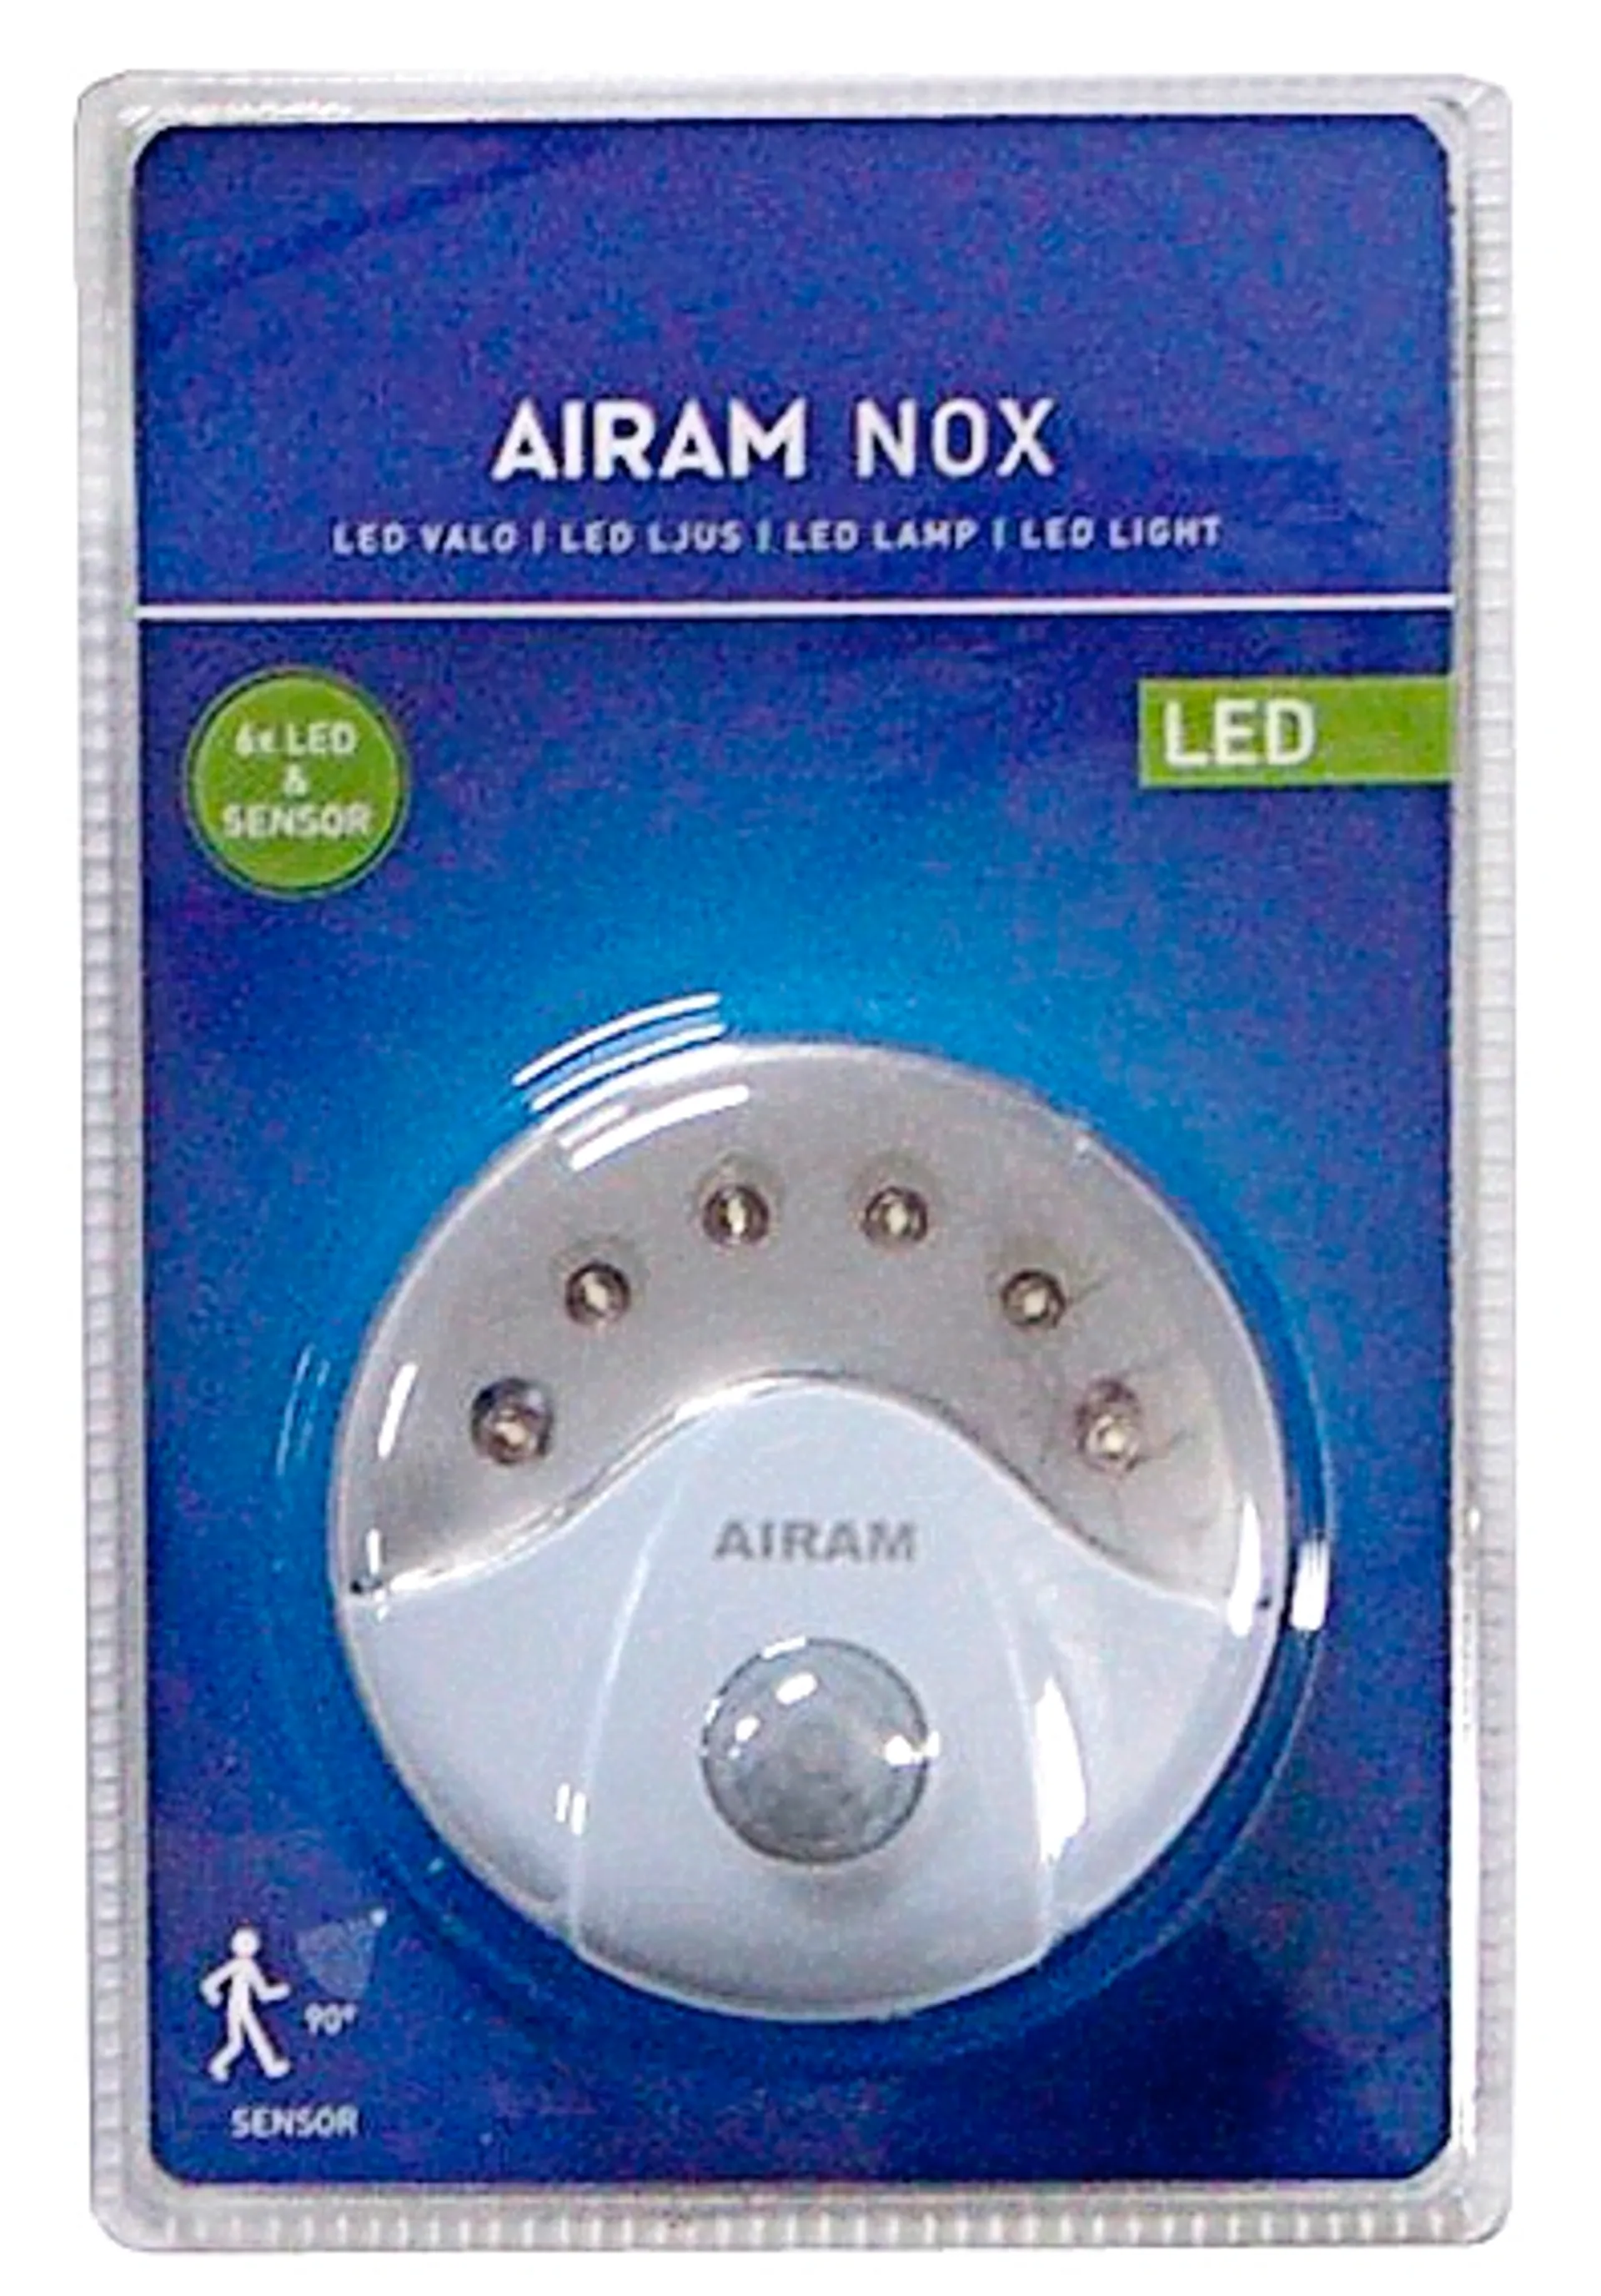 Airam LED Nox paristovalaisin - 2